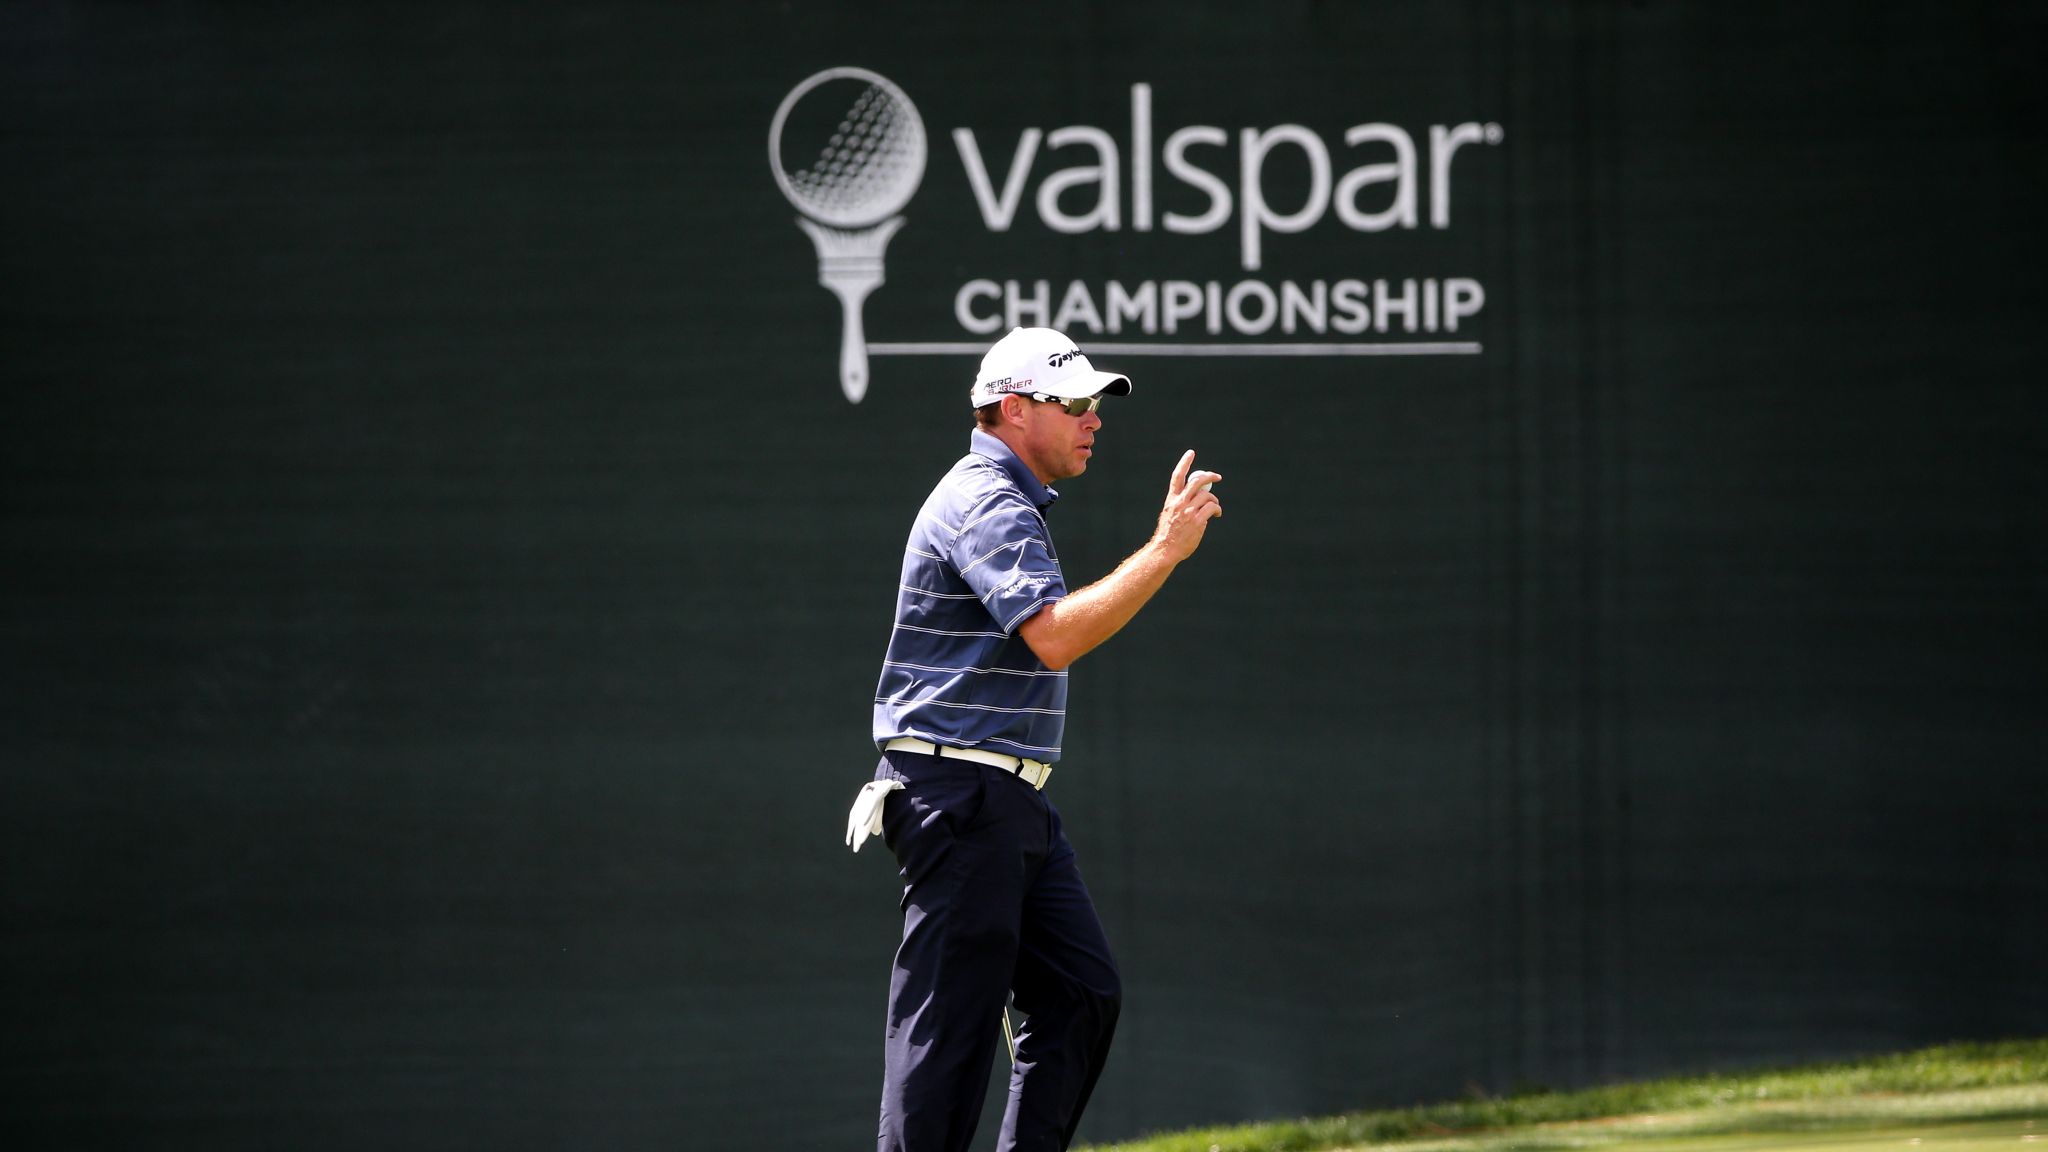 Brian Davis earns first round lead at Valspar Championship Golf News Sky Sports